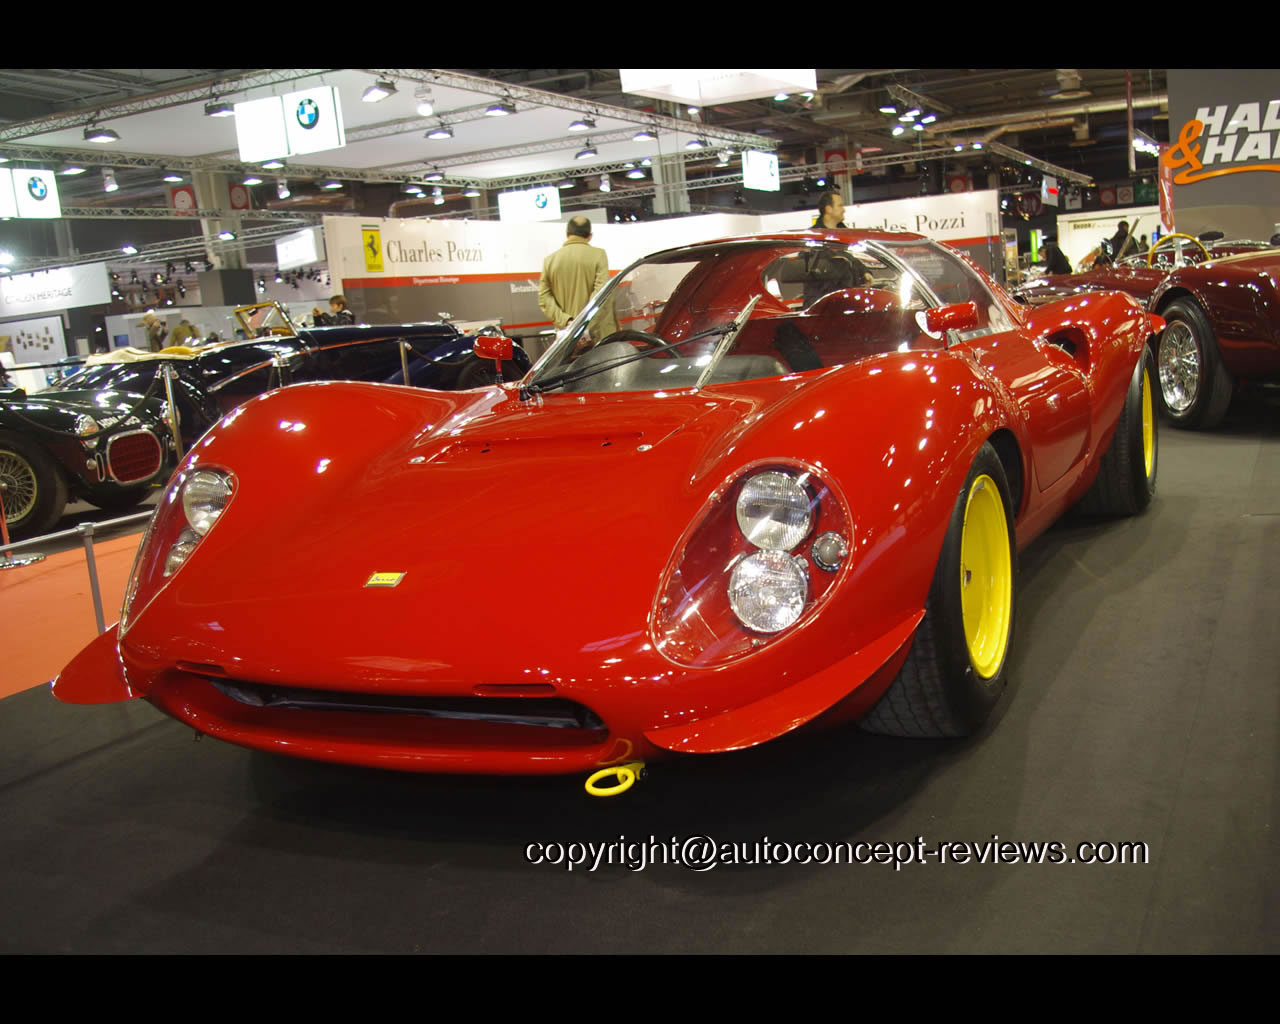 Ferrari Dino 206 S Wallpapers